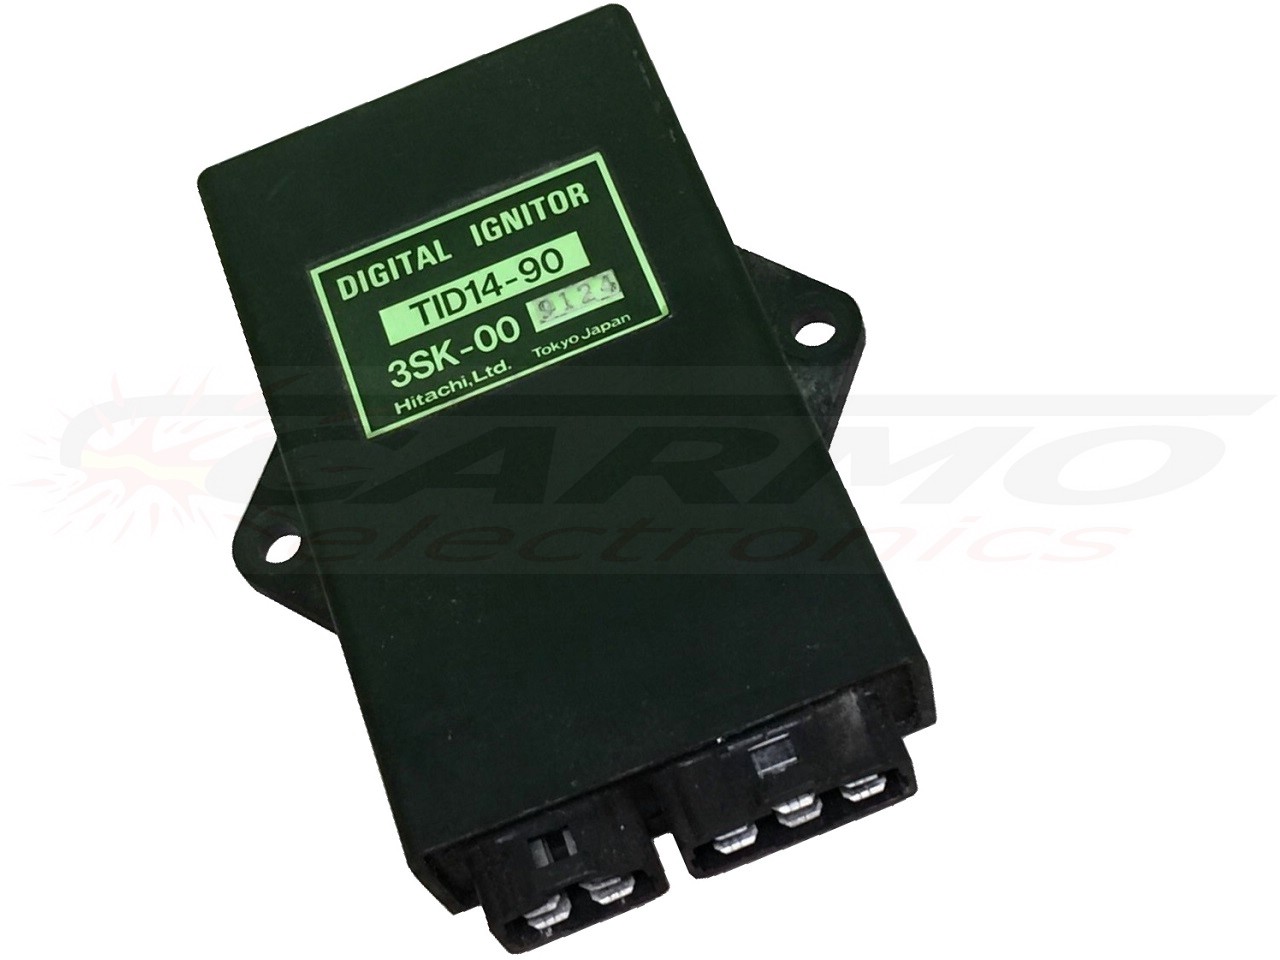 FJ1200 TCI CDI dispositif de commande boîte noire (TID14-90, 3SK-00, 3SK-01)